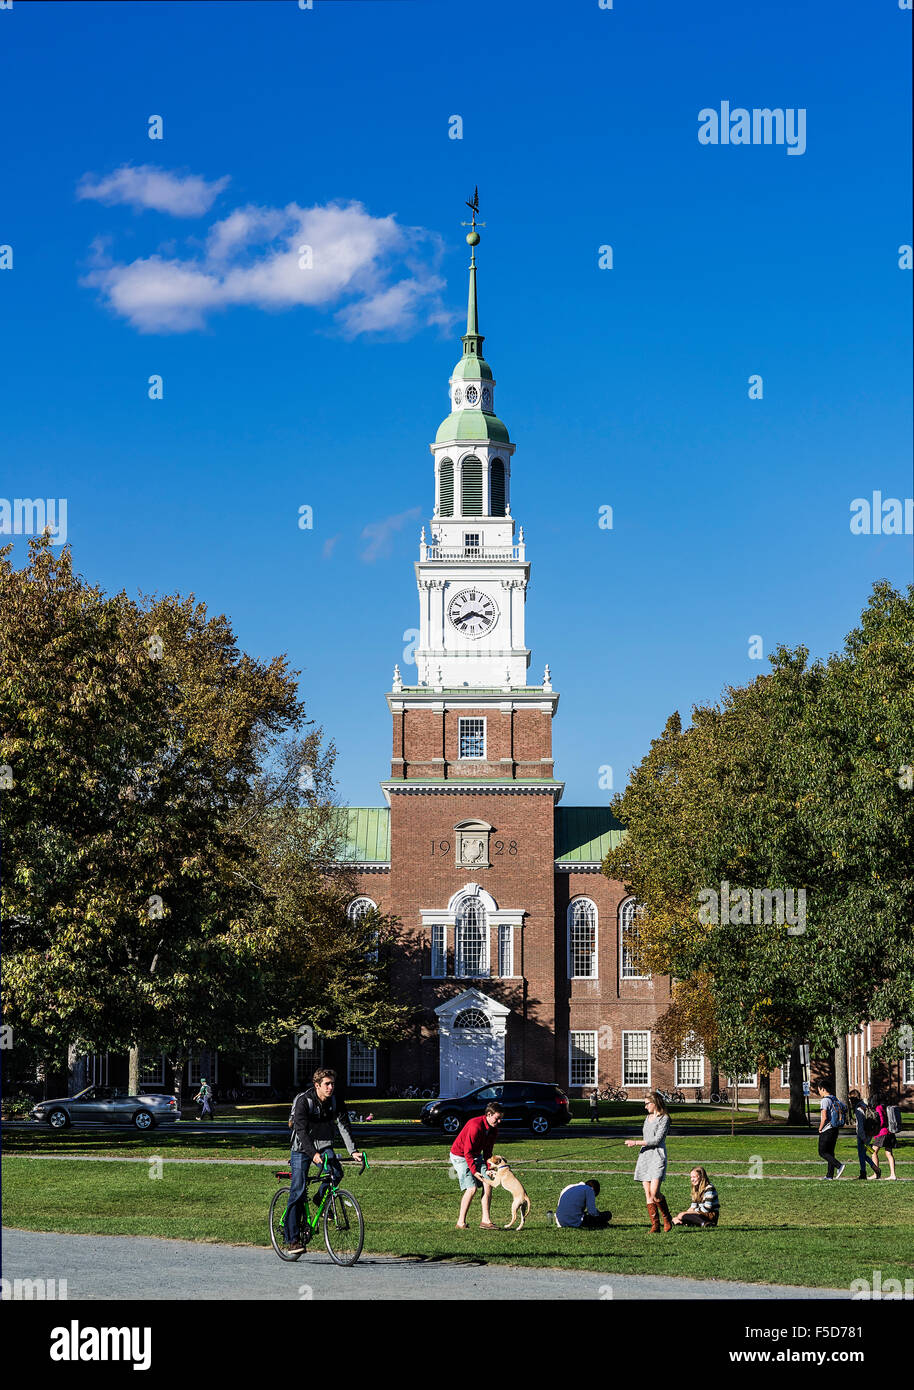 Baker Library tower and campus life at Dartmouth University, Hanover, New Hampshire, USA Stock Photo